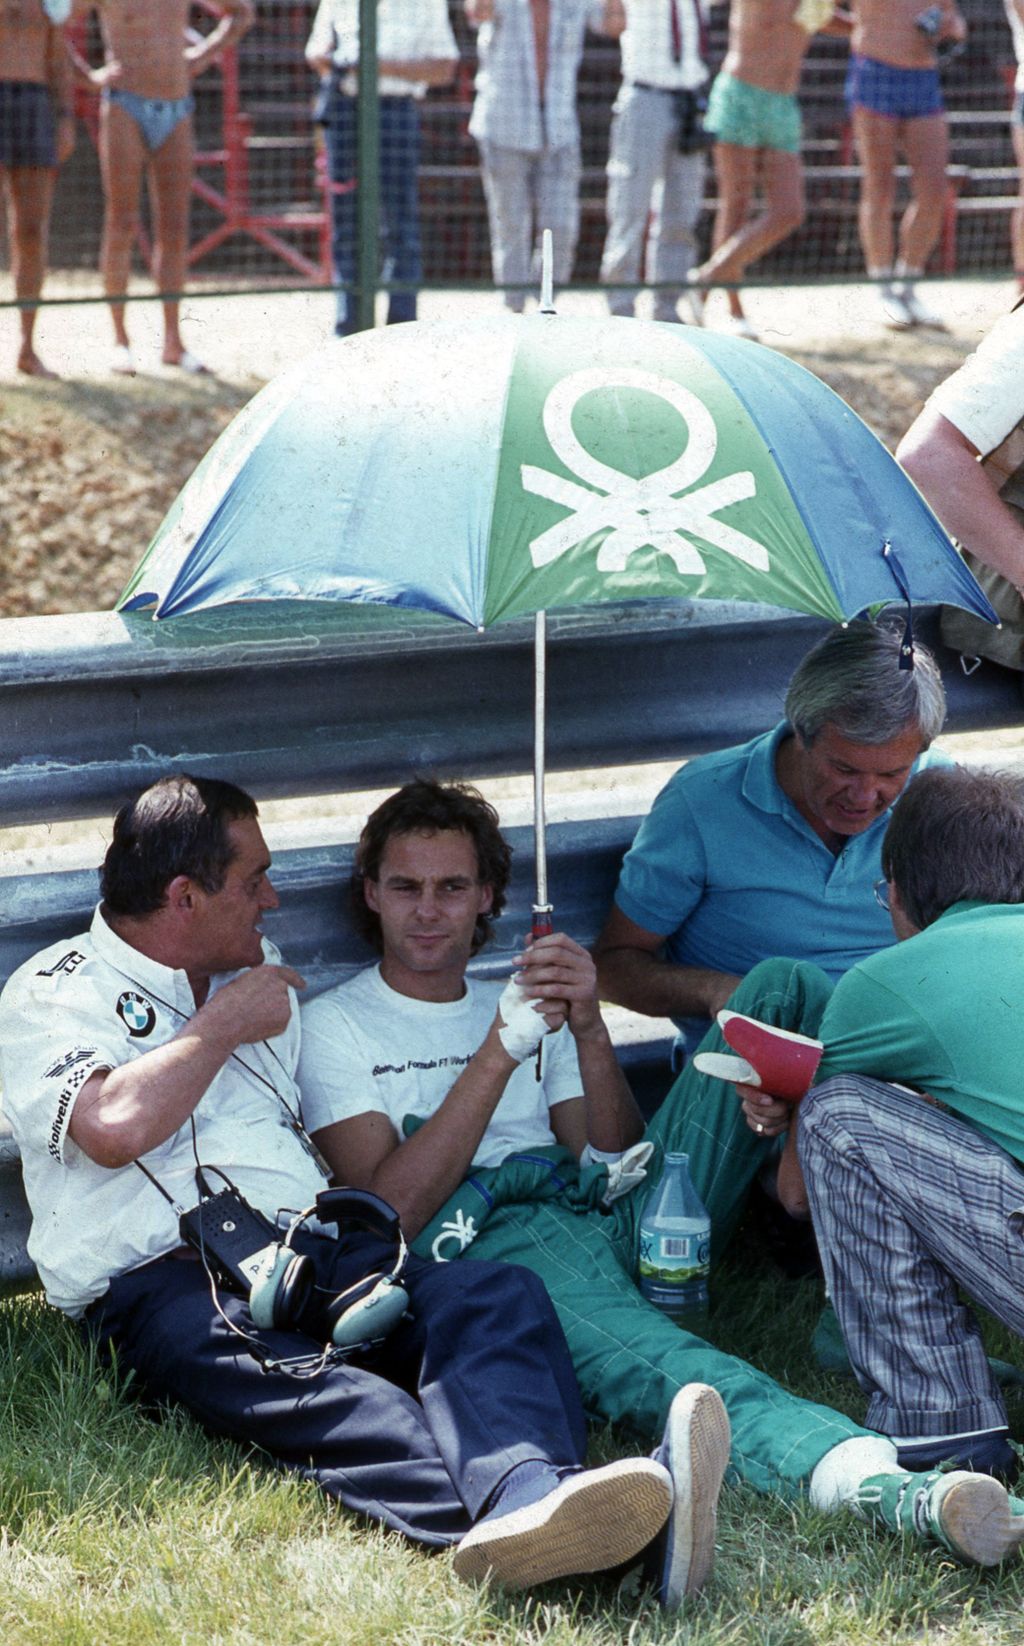 1. Magyar Nagydíj, Gerhard Berger, Benetton-BMW 